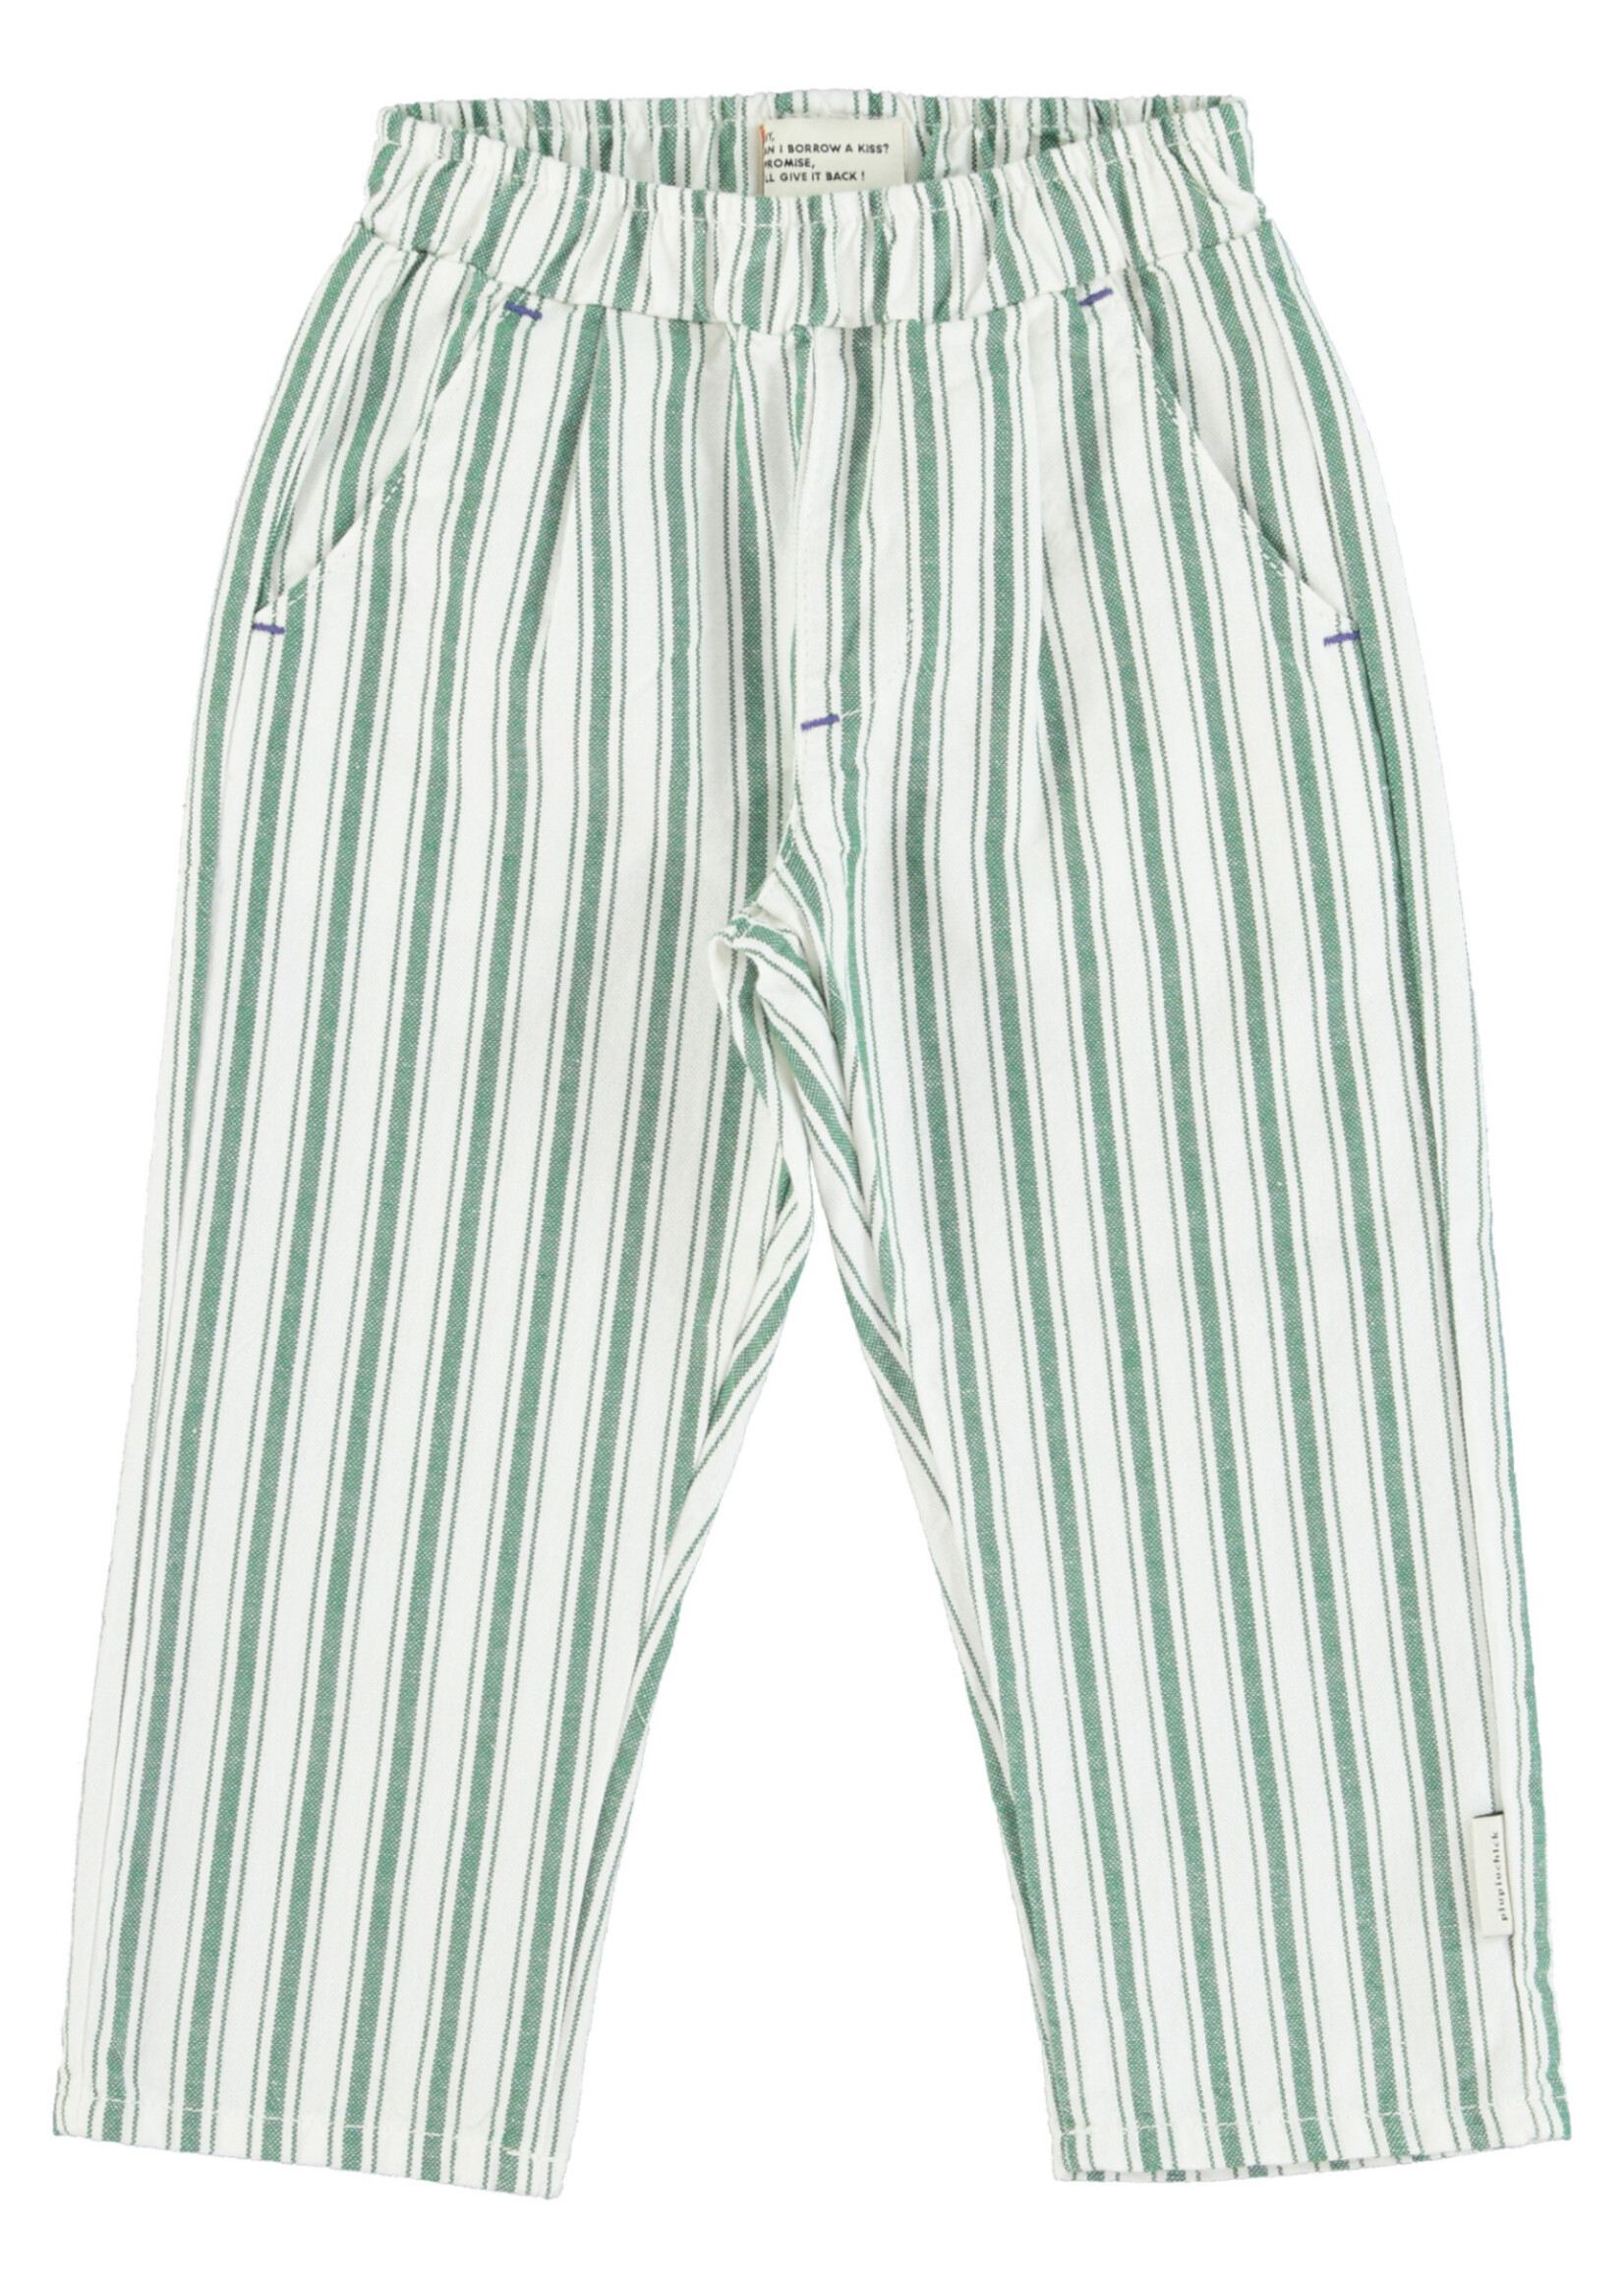 Piupiuchick Unisex trousers white green stripes - Piupiuchick